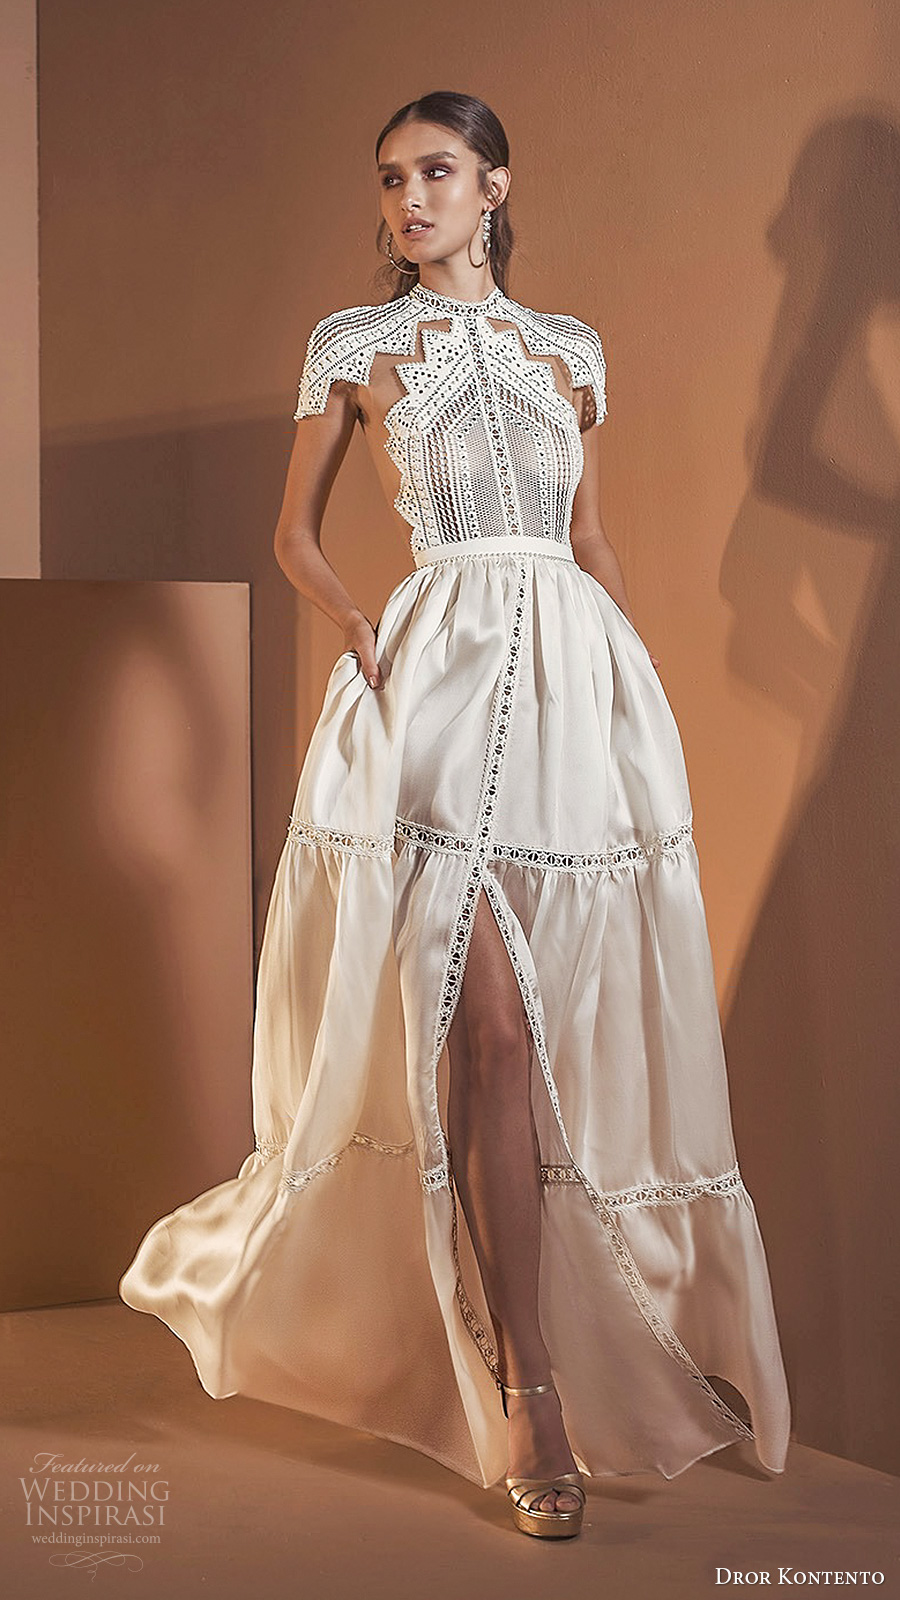 dror kontento 2020 bridal short sleeves high neckline embellish lace cutout bodice slit skirt modern a line ball gown wedding dress pockets sheer back (11) mv